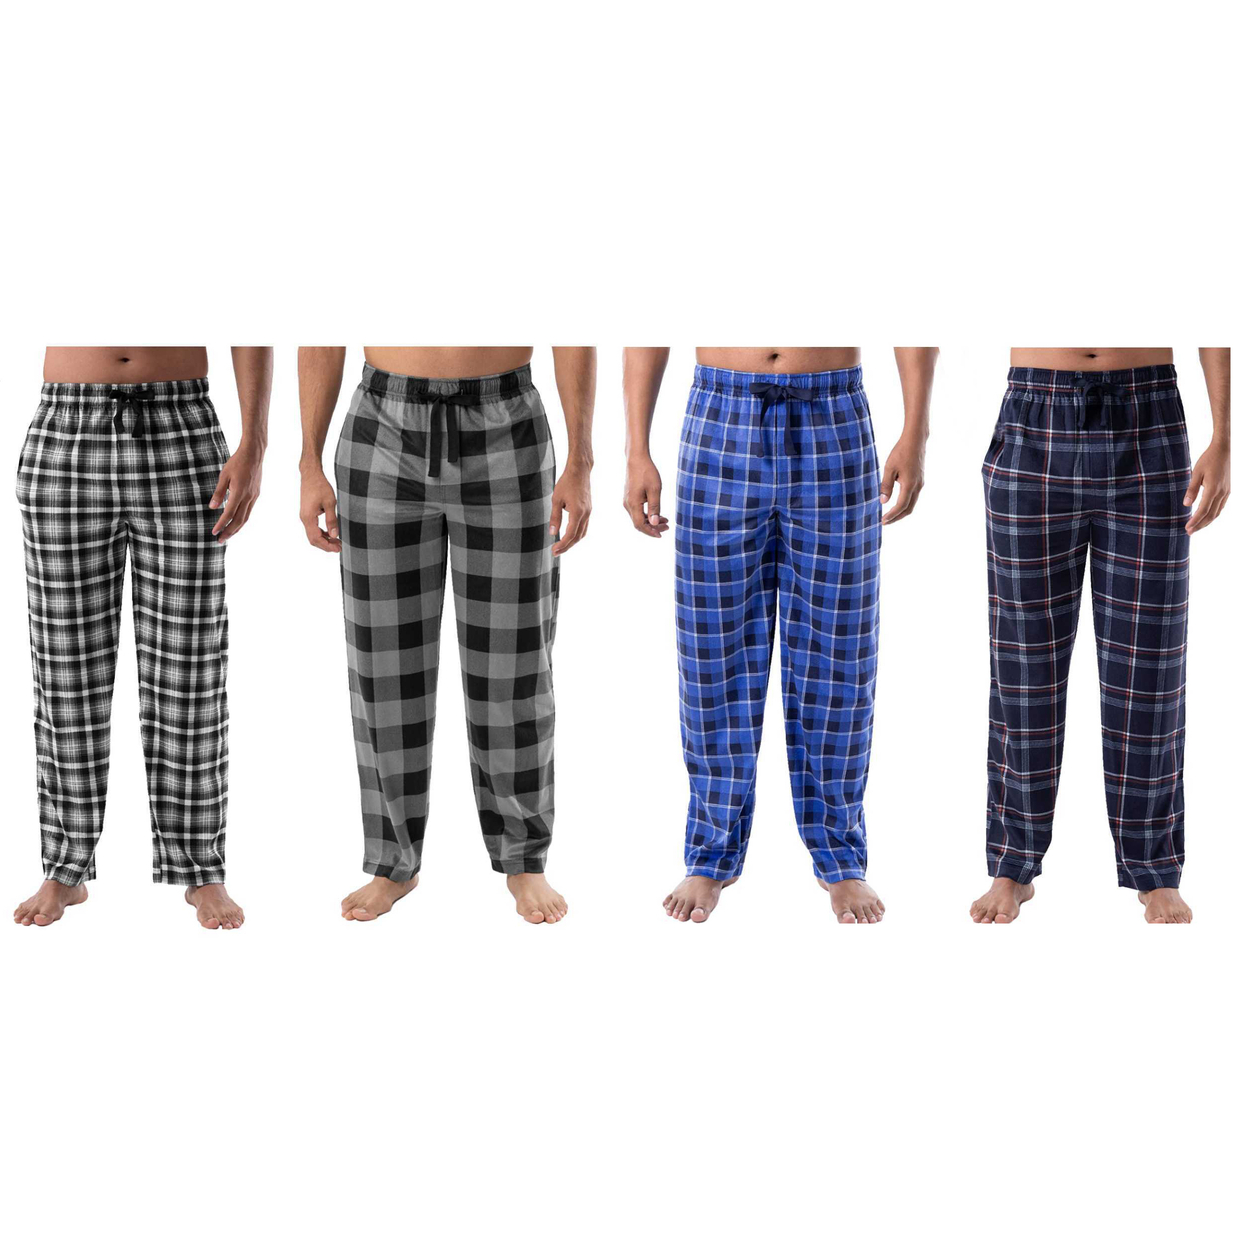 4-Pack: Men's Ultra-Soft Cozy Lounge Sleep Micro Fleece Plaid Pajama Pants - X-large